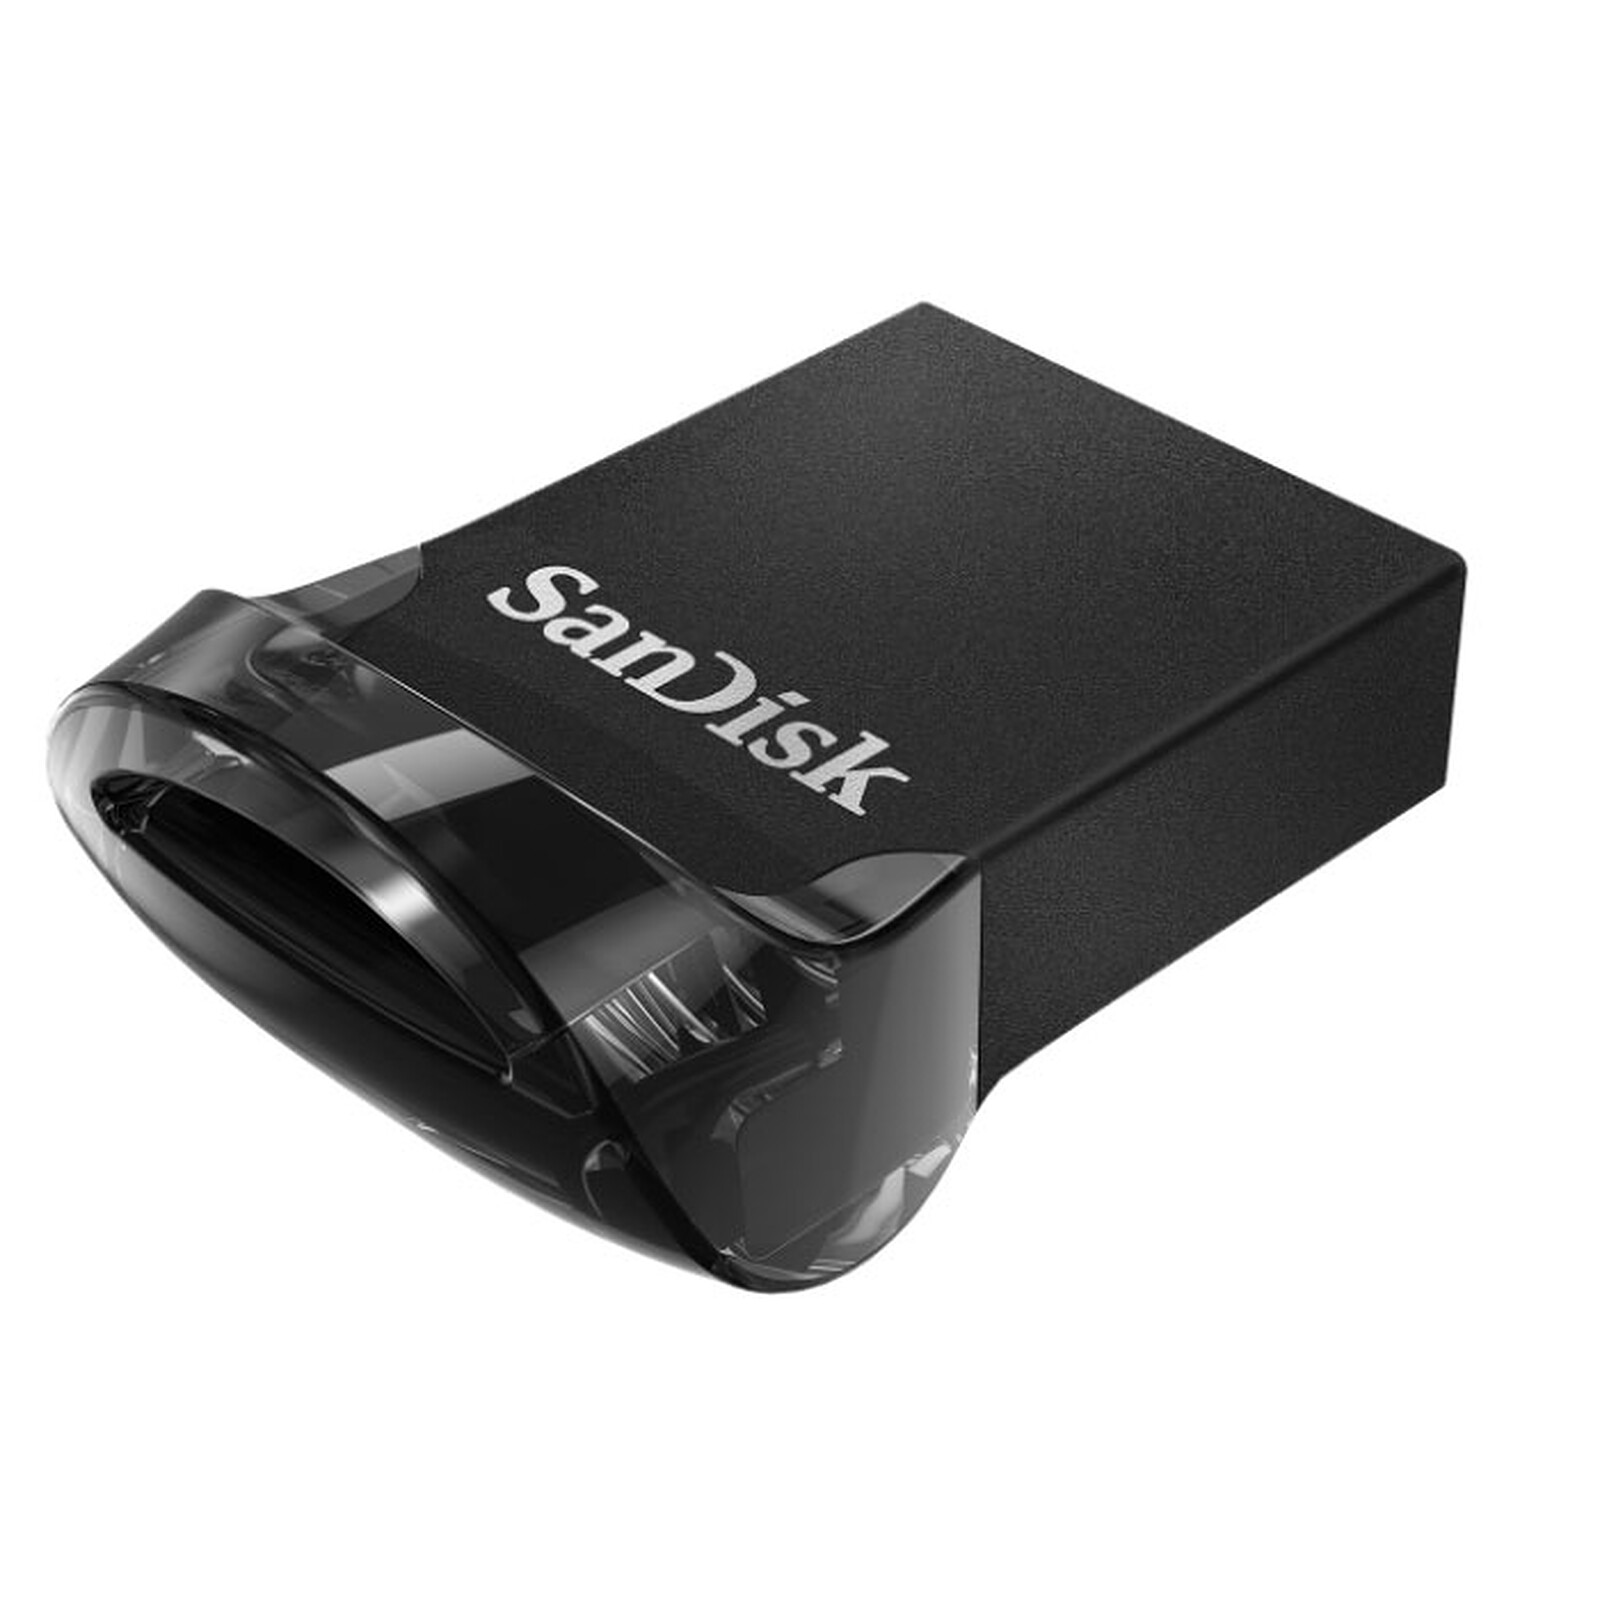 SanDisk Professional G-Drive 18 To - Disque dur externe - LDLC